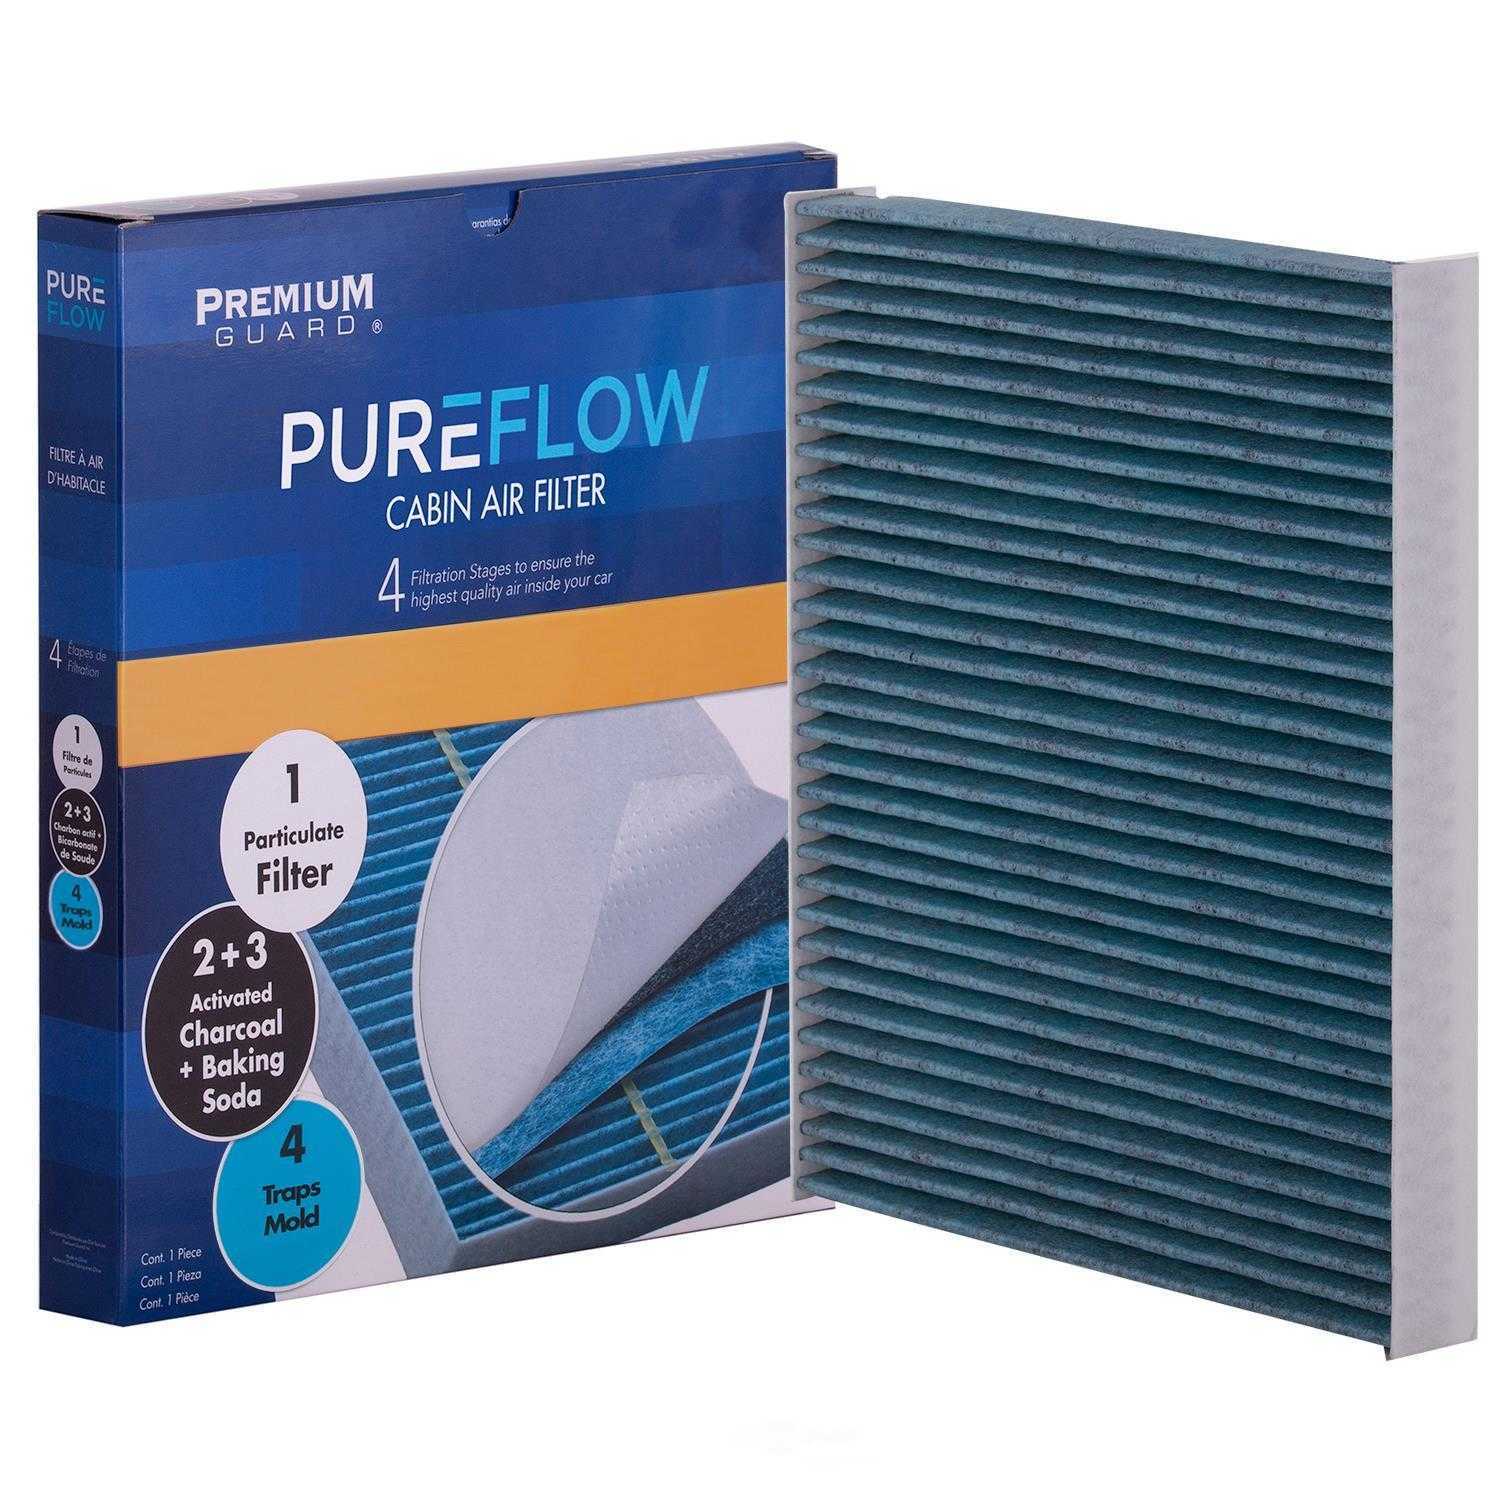 PREMIUM GUARD PUREFLOW - PureFlow - PG6 PC4080X